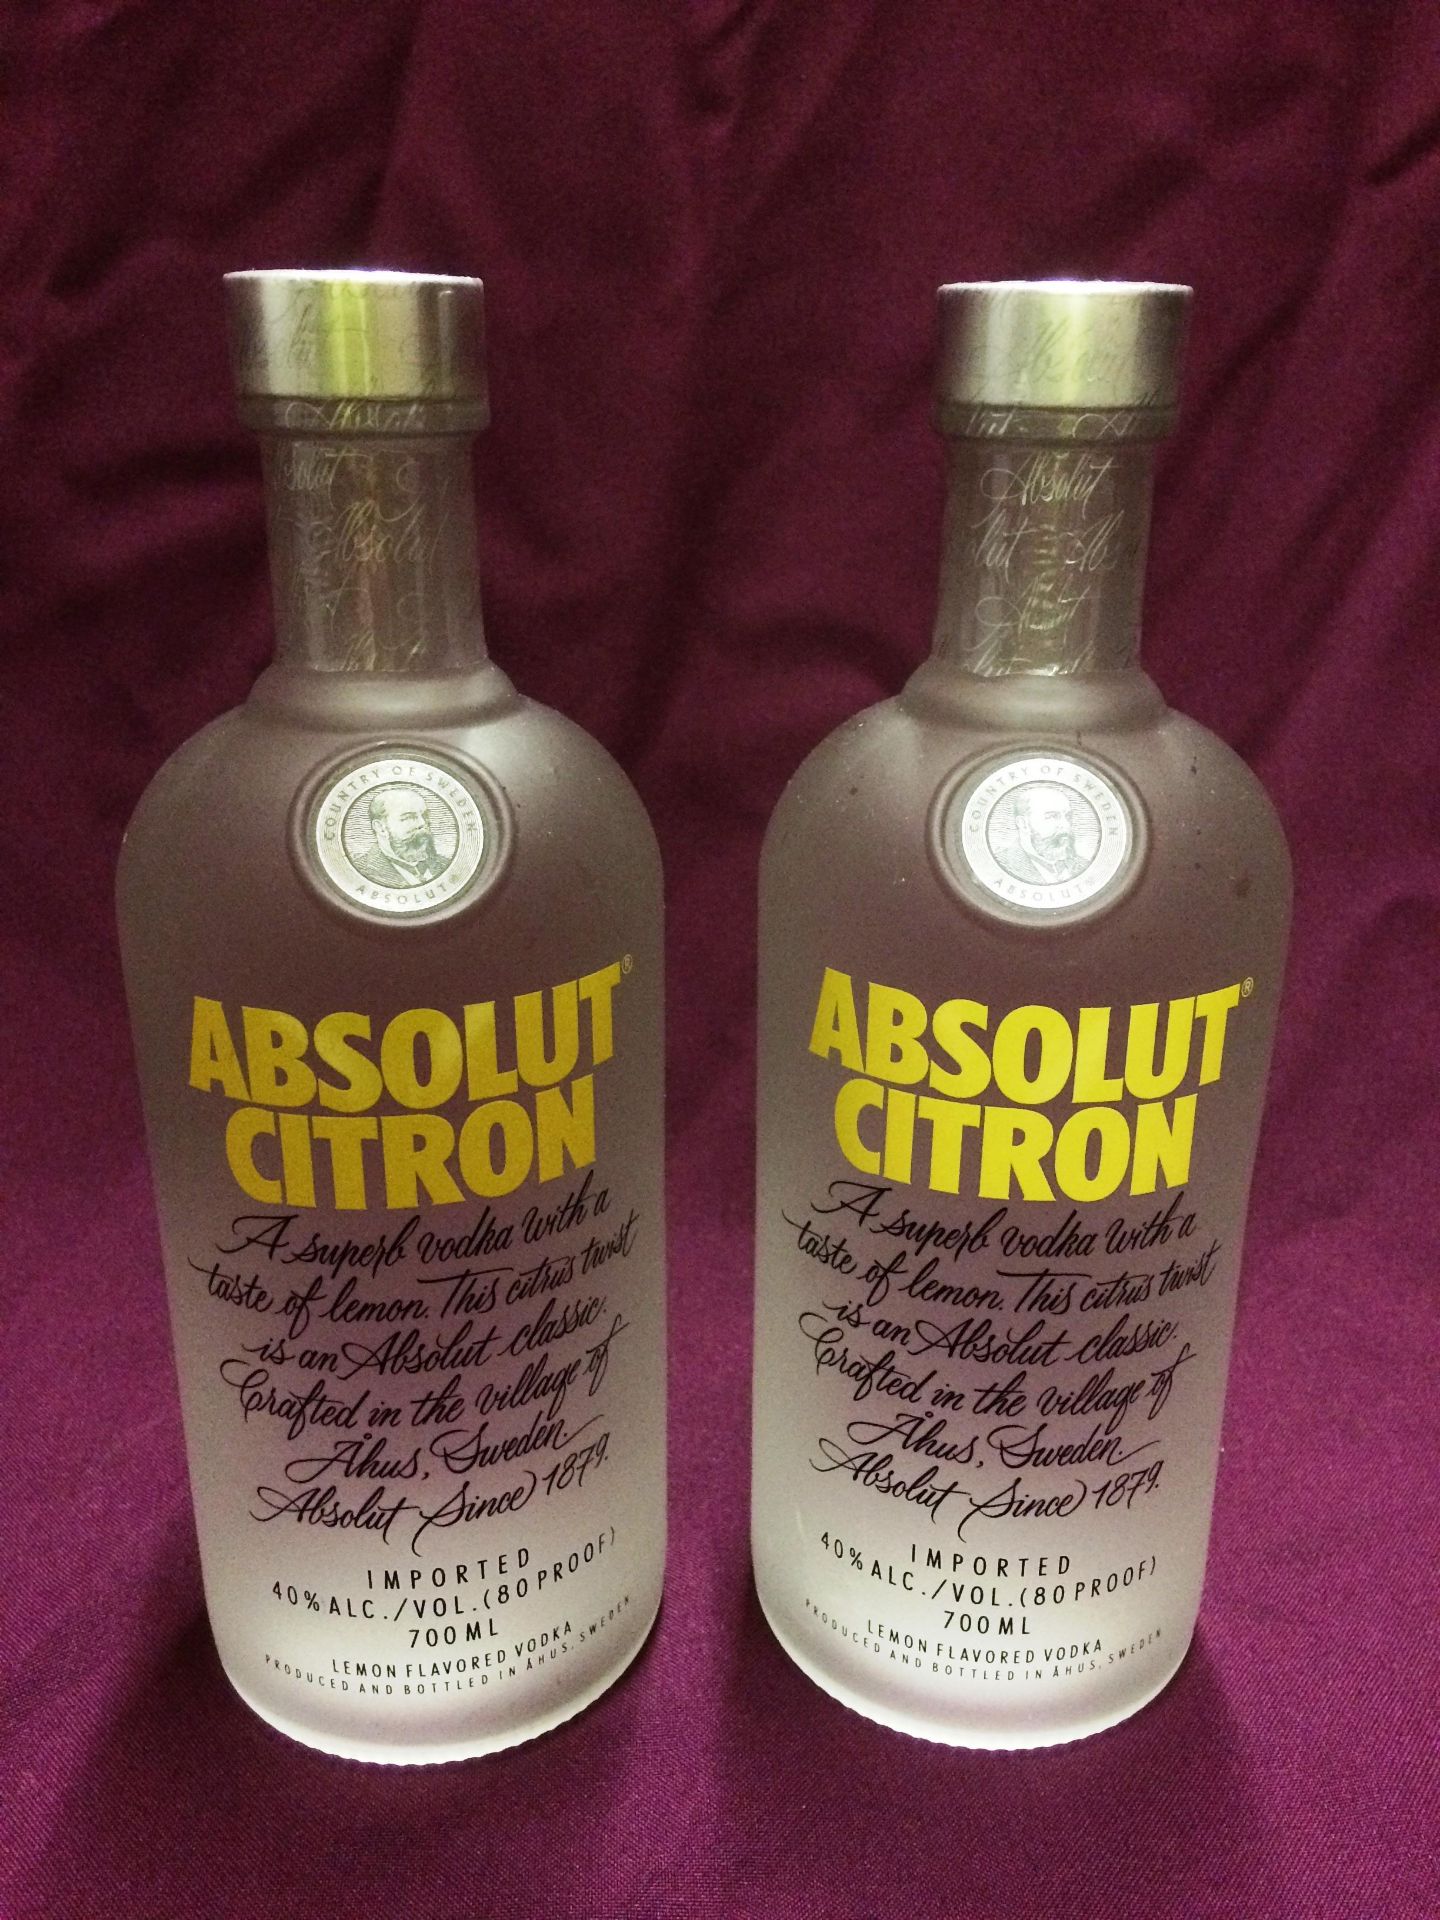 2 x 700ml bottles of Absolut Citron Vodka